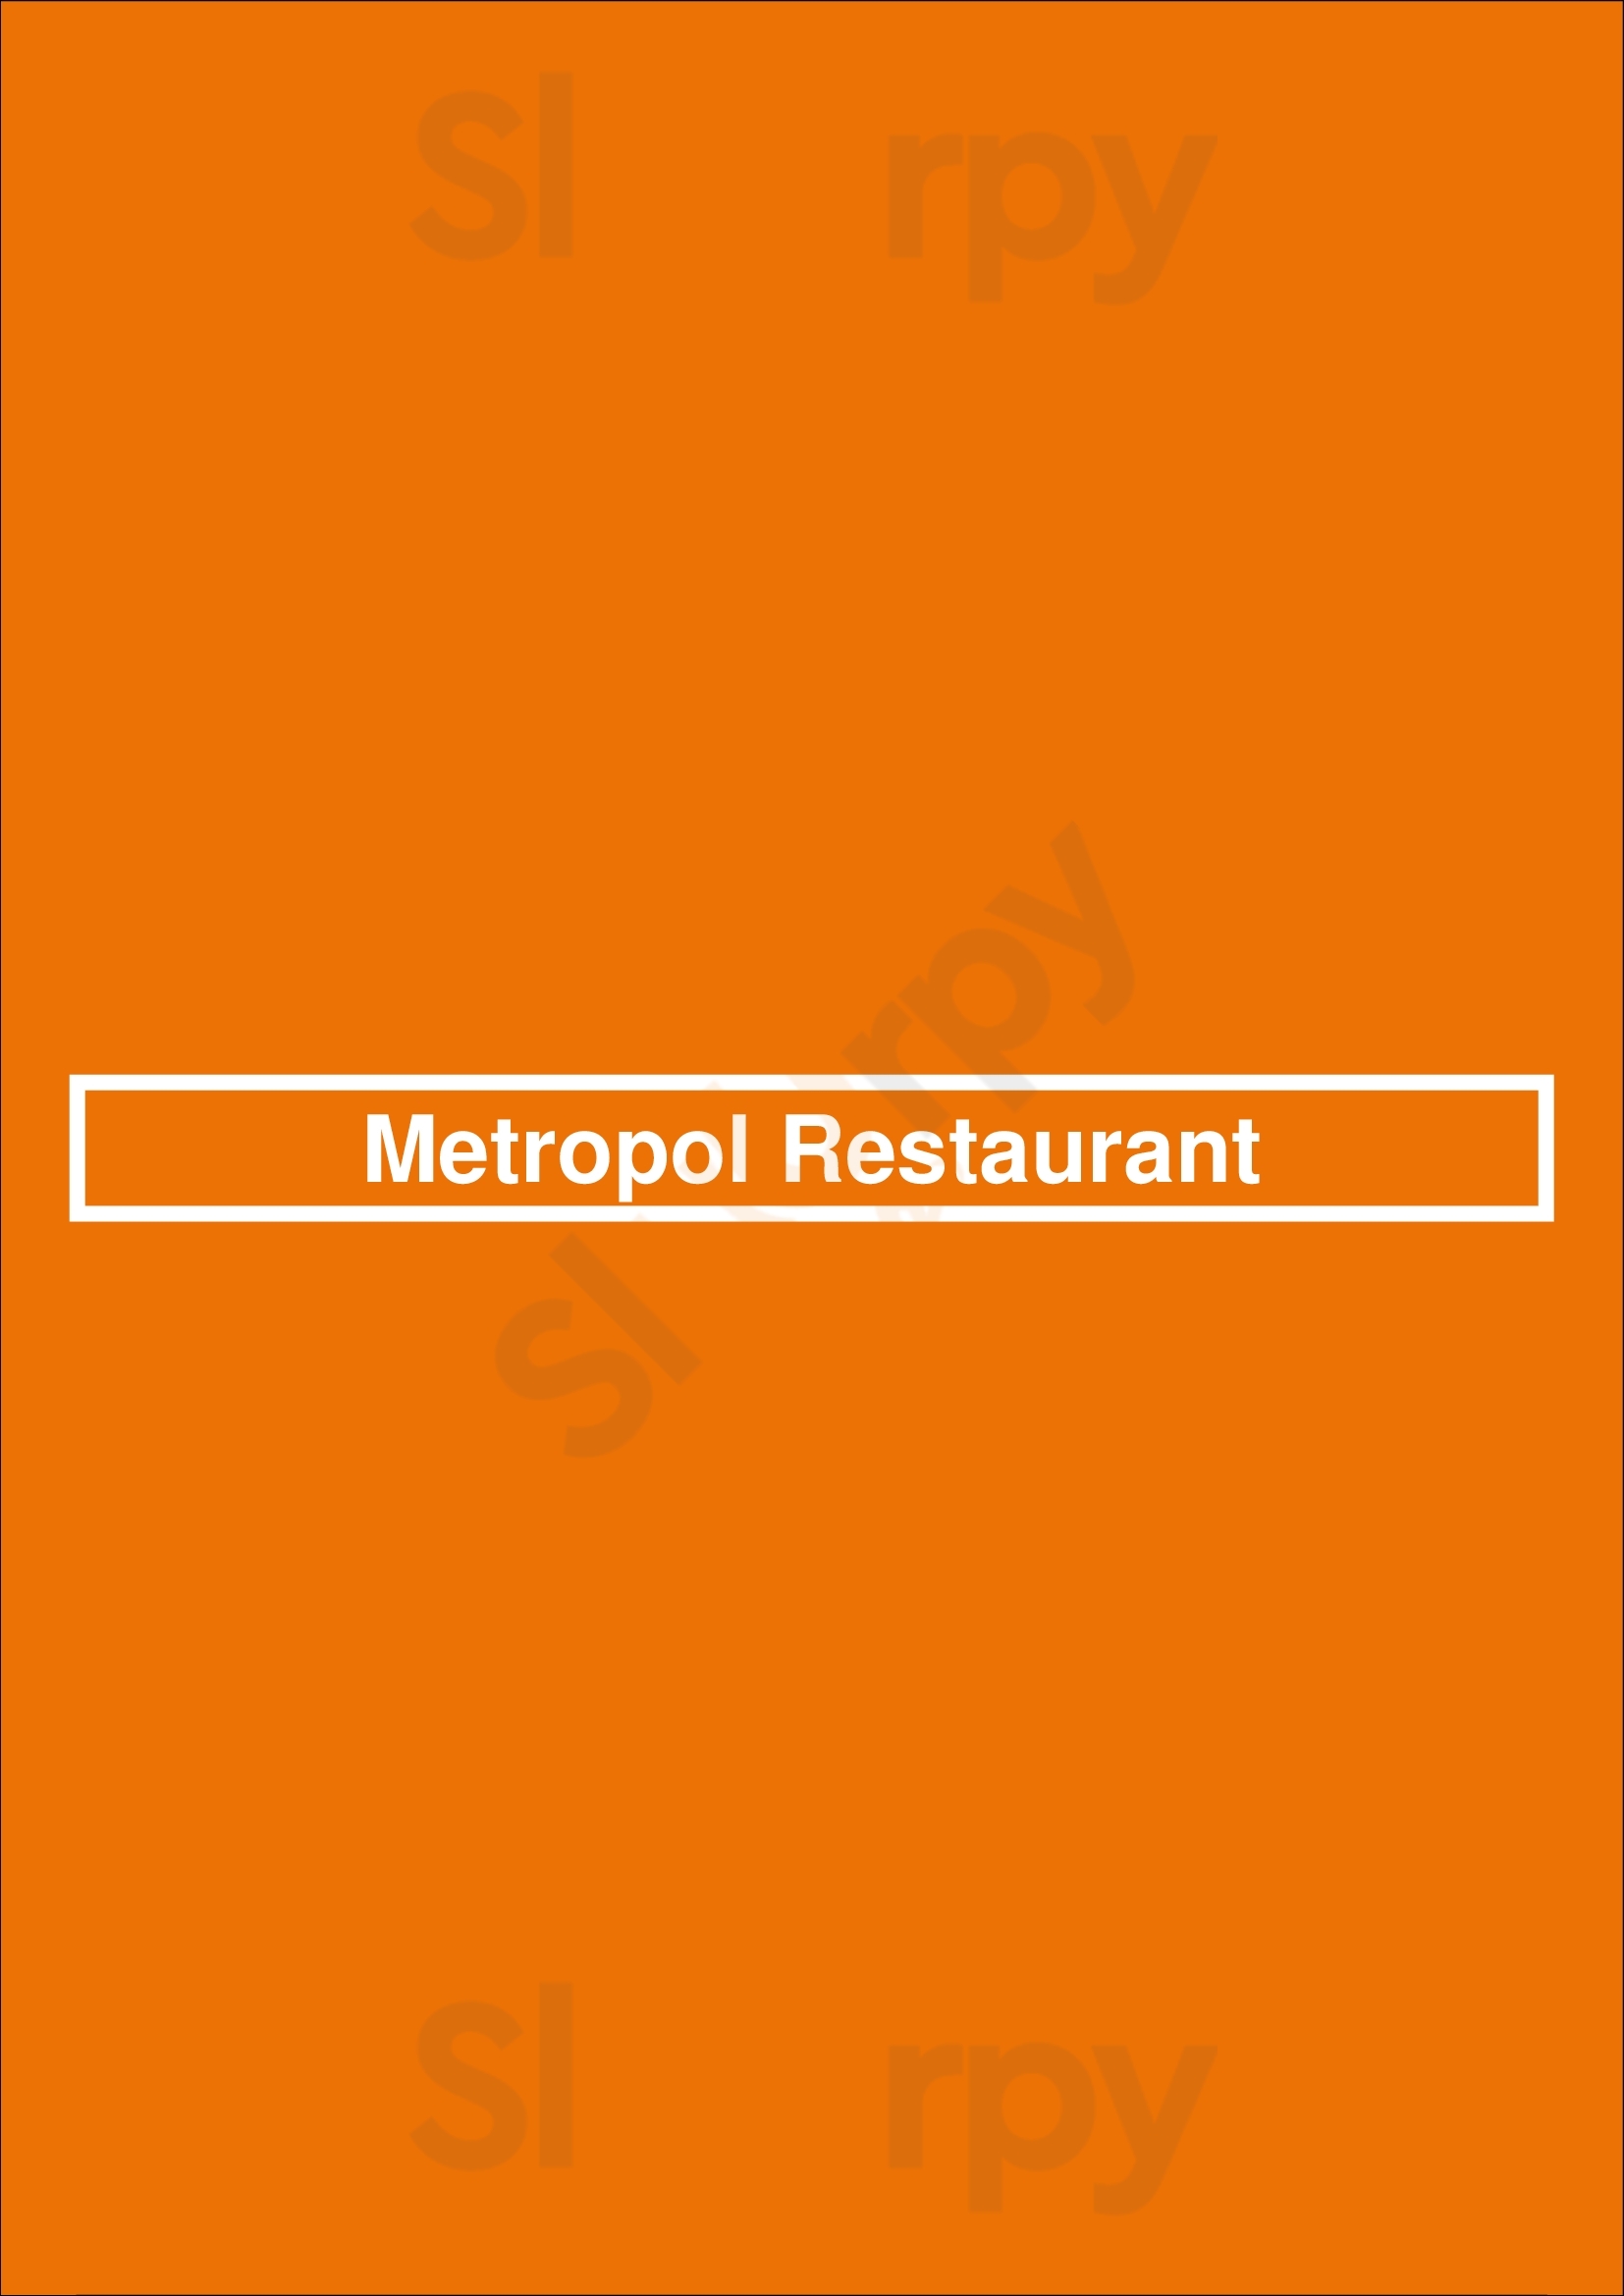 Metropol Restaurant & Bar Miami Menu - 1